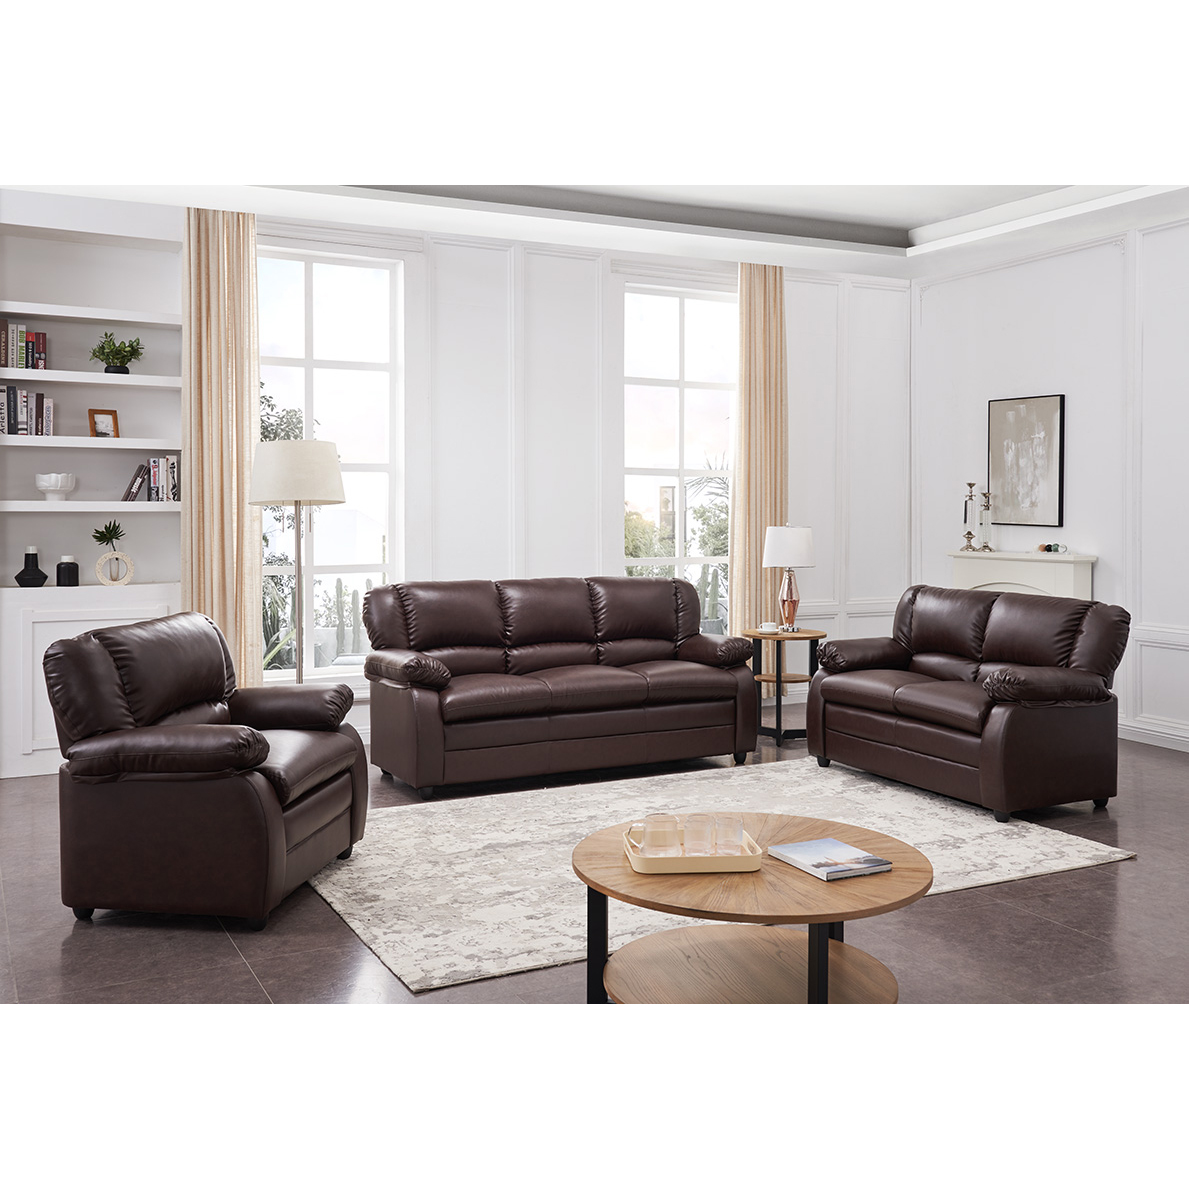 Abanda Leather Living Room Set (Brown)